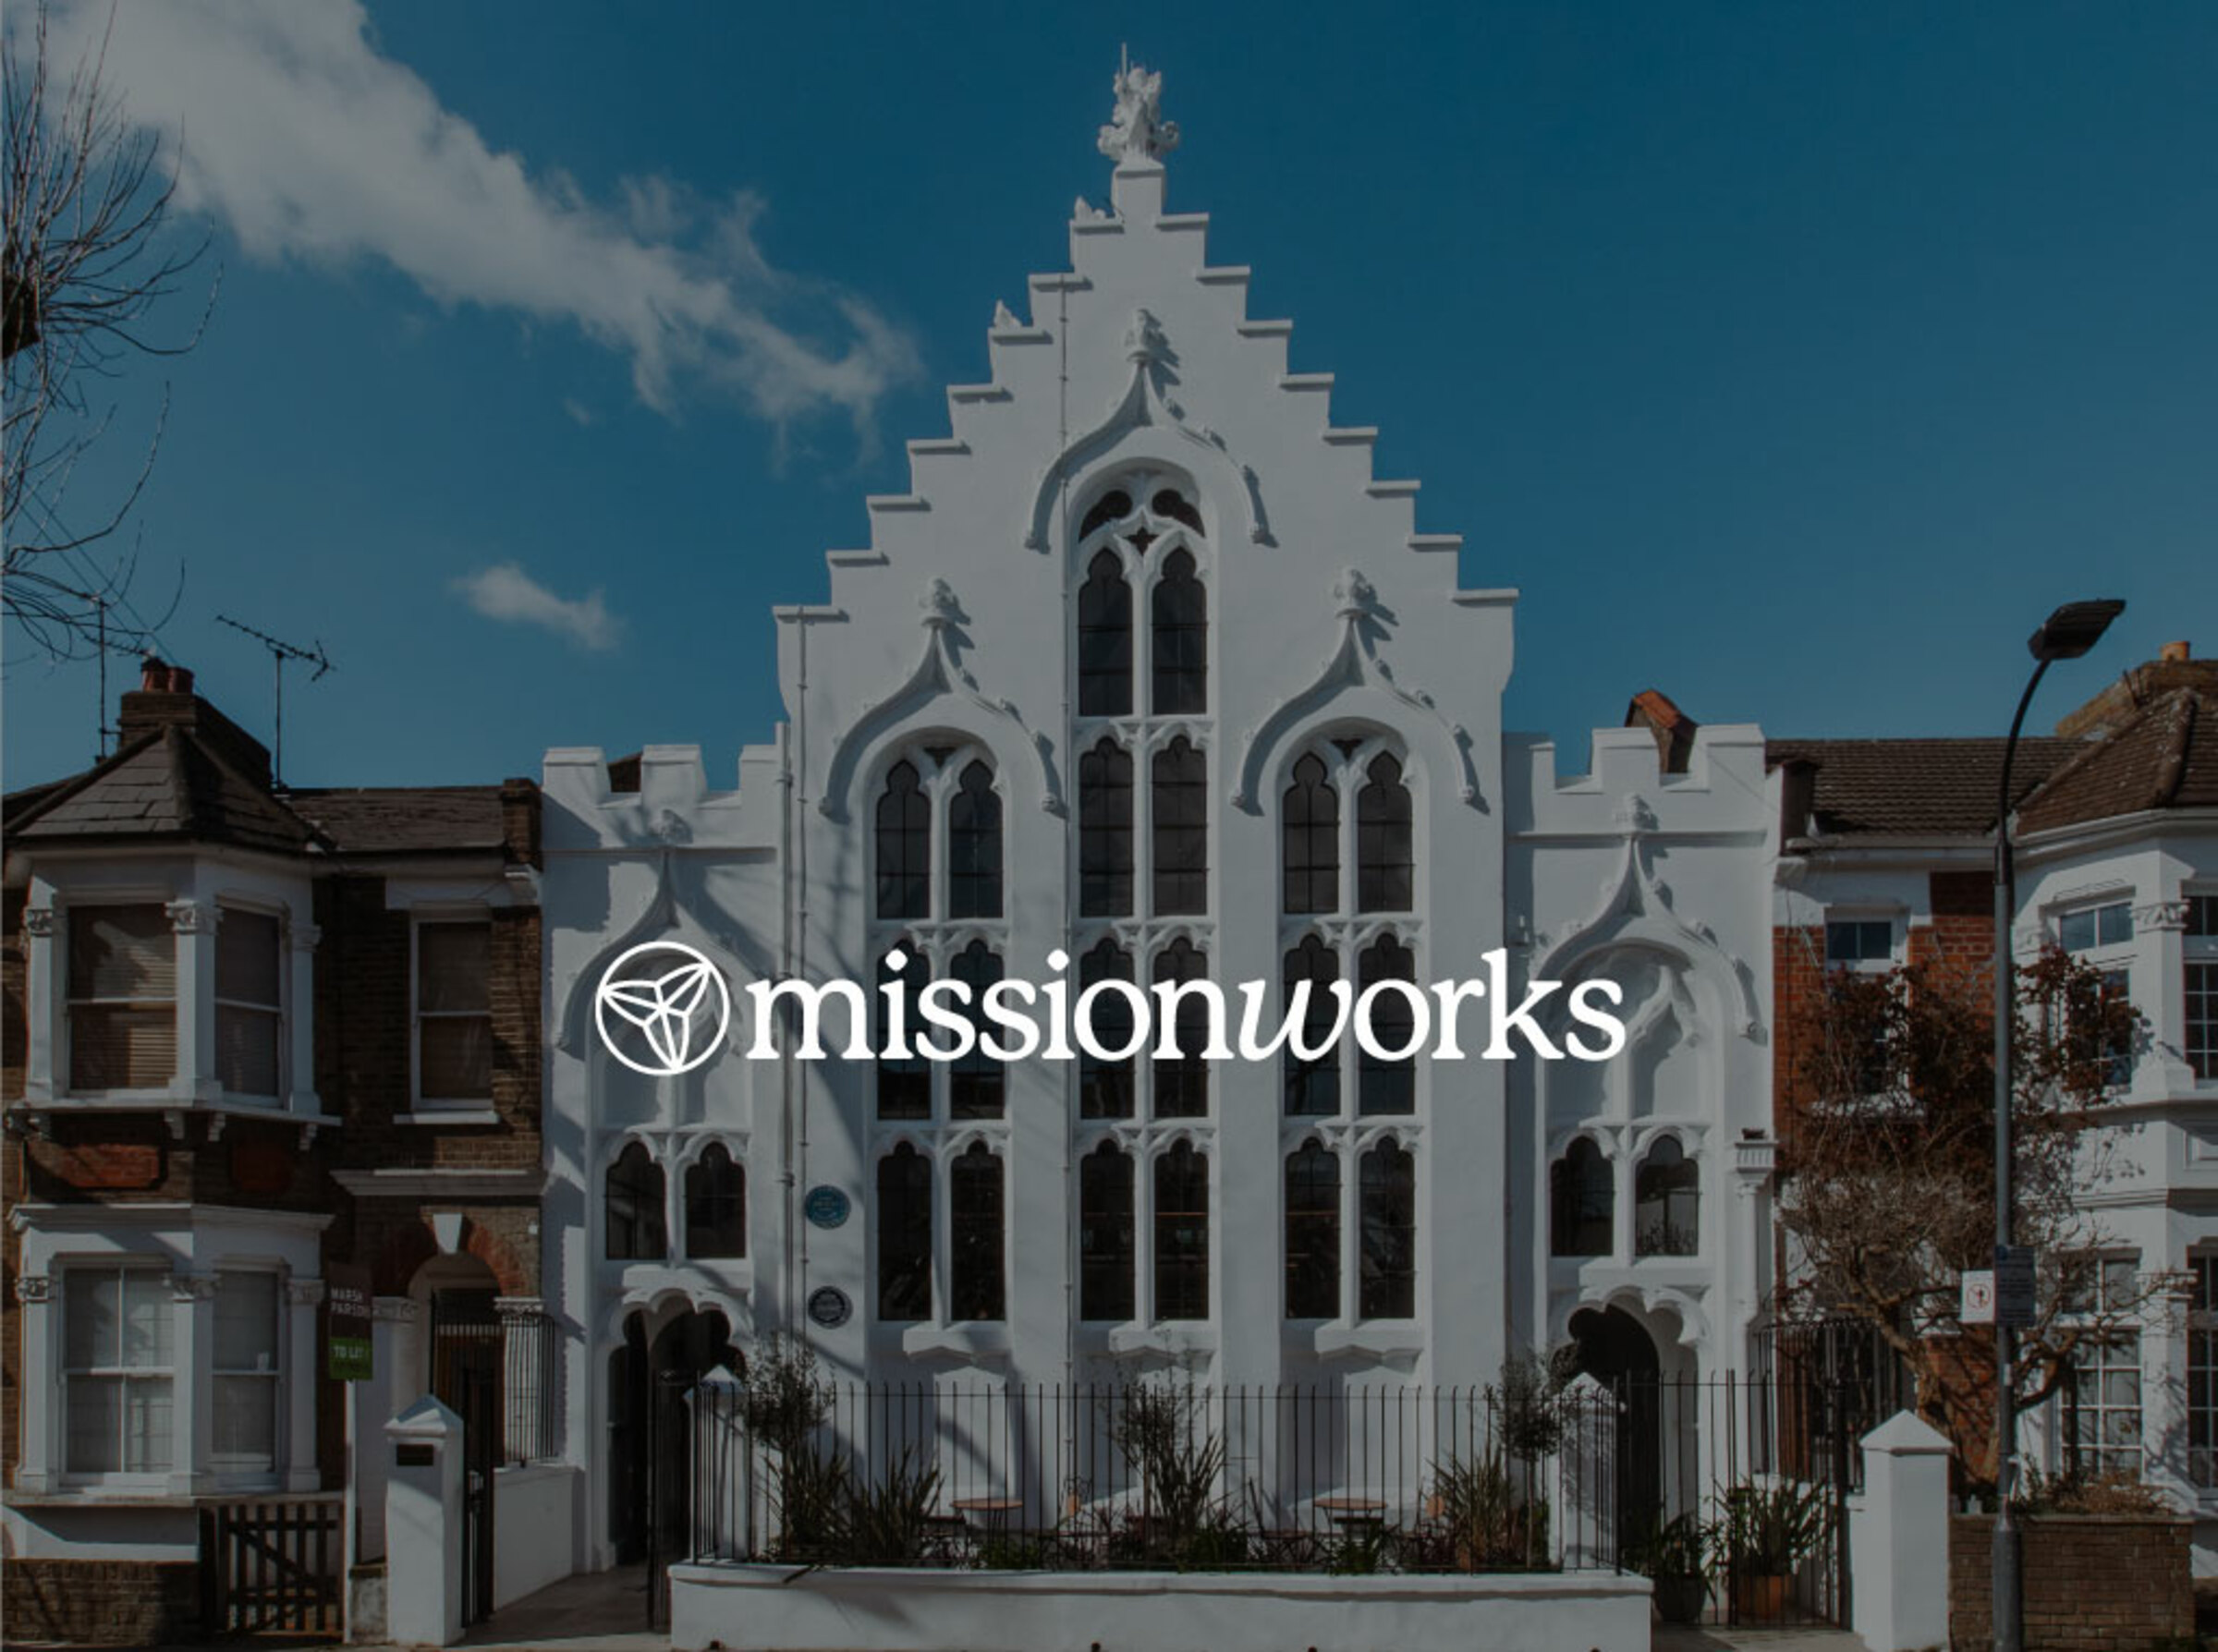 Missionworks coworking space in Hammersmith